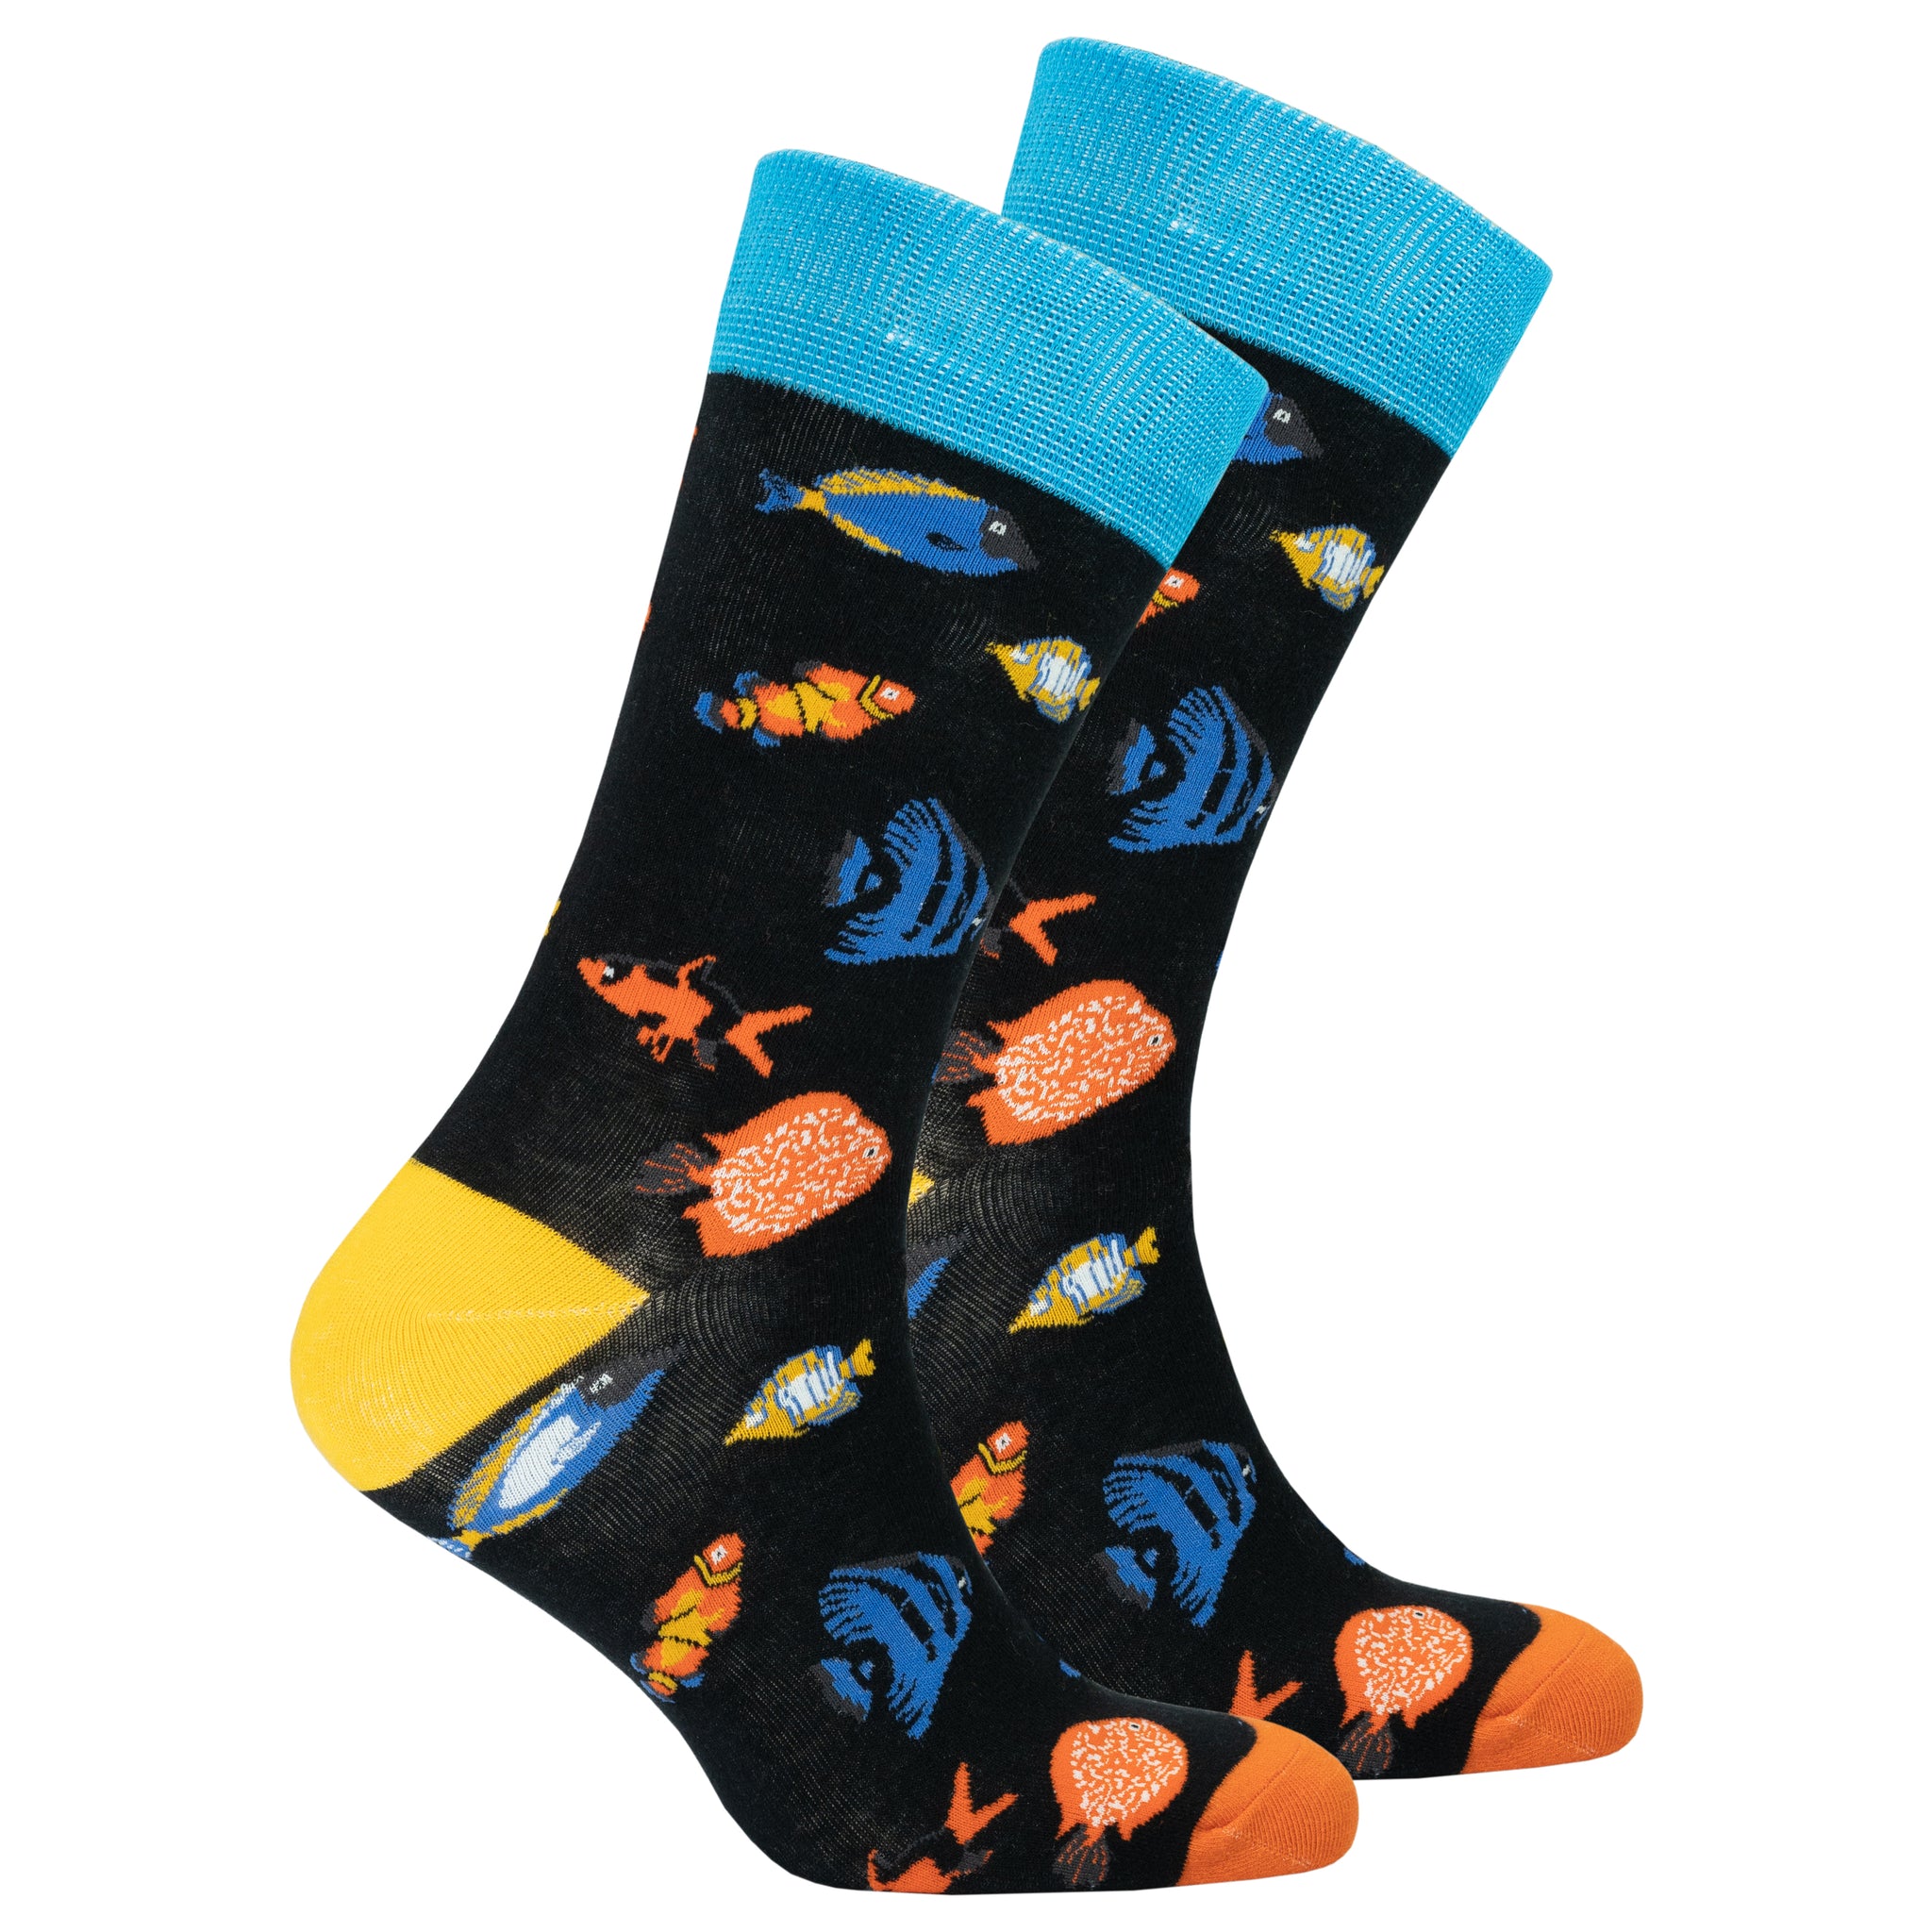 Men's Fish Socks blue black orange